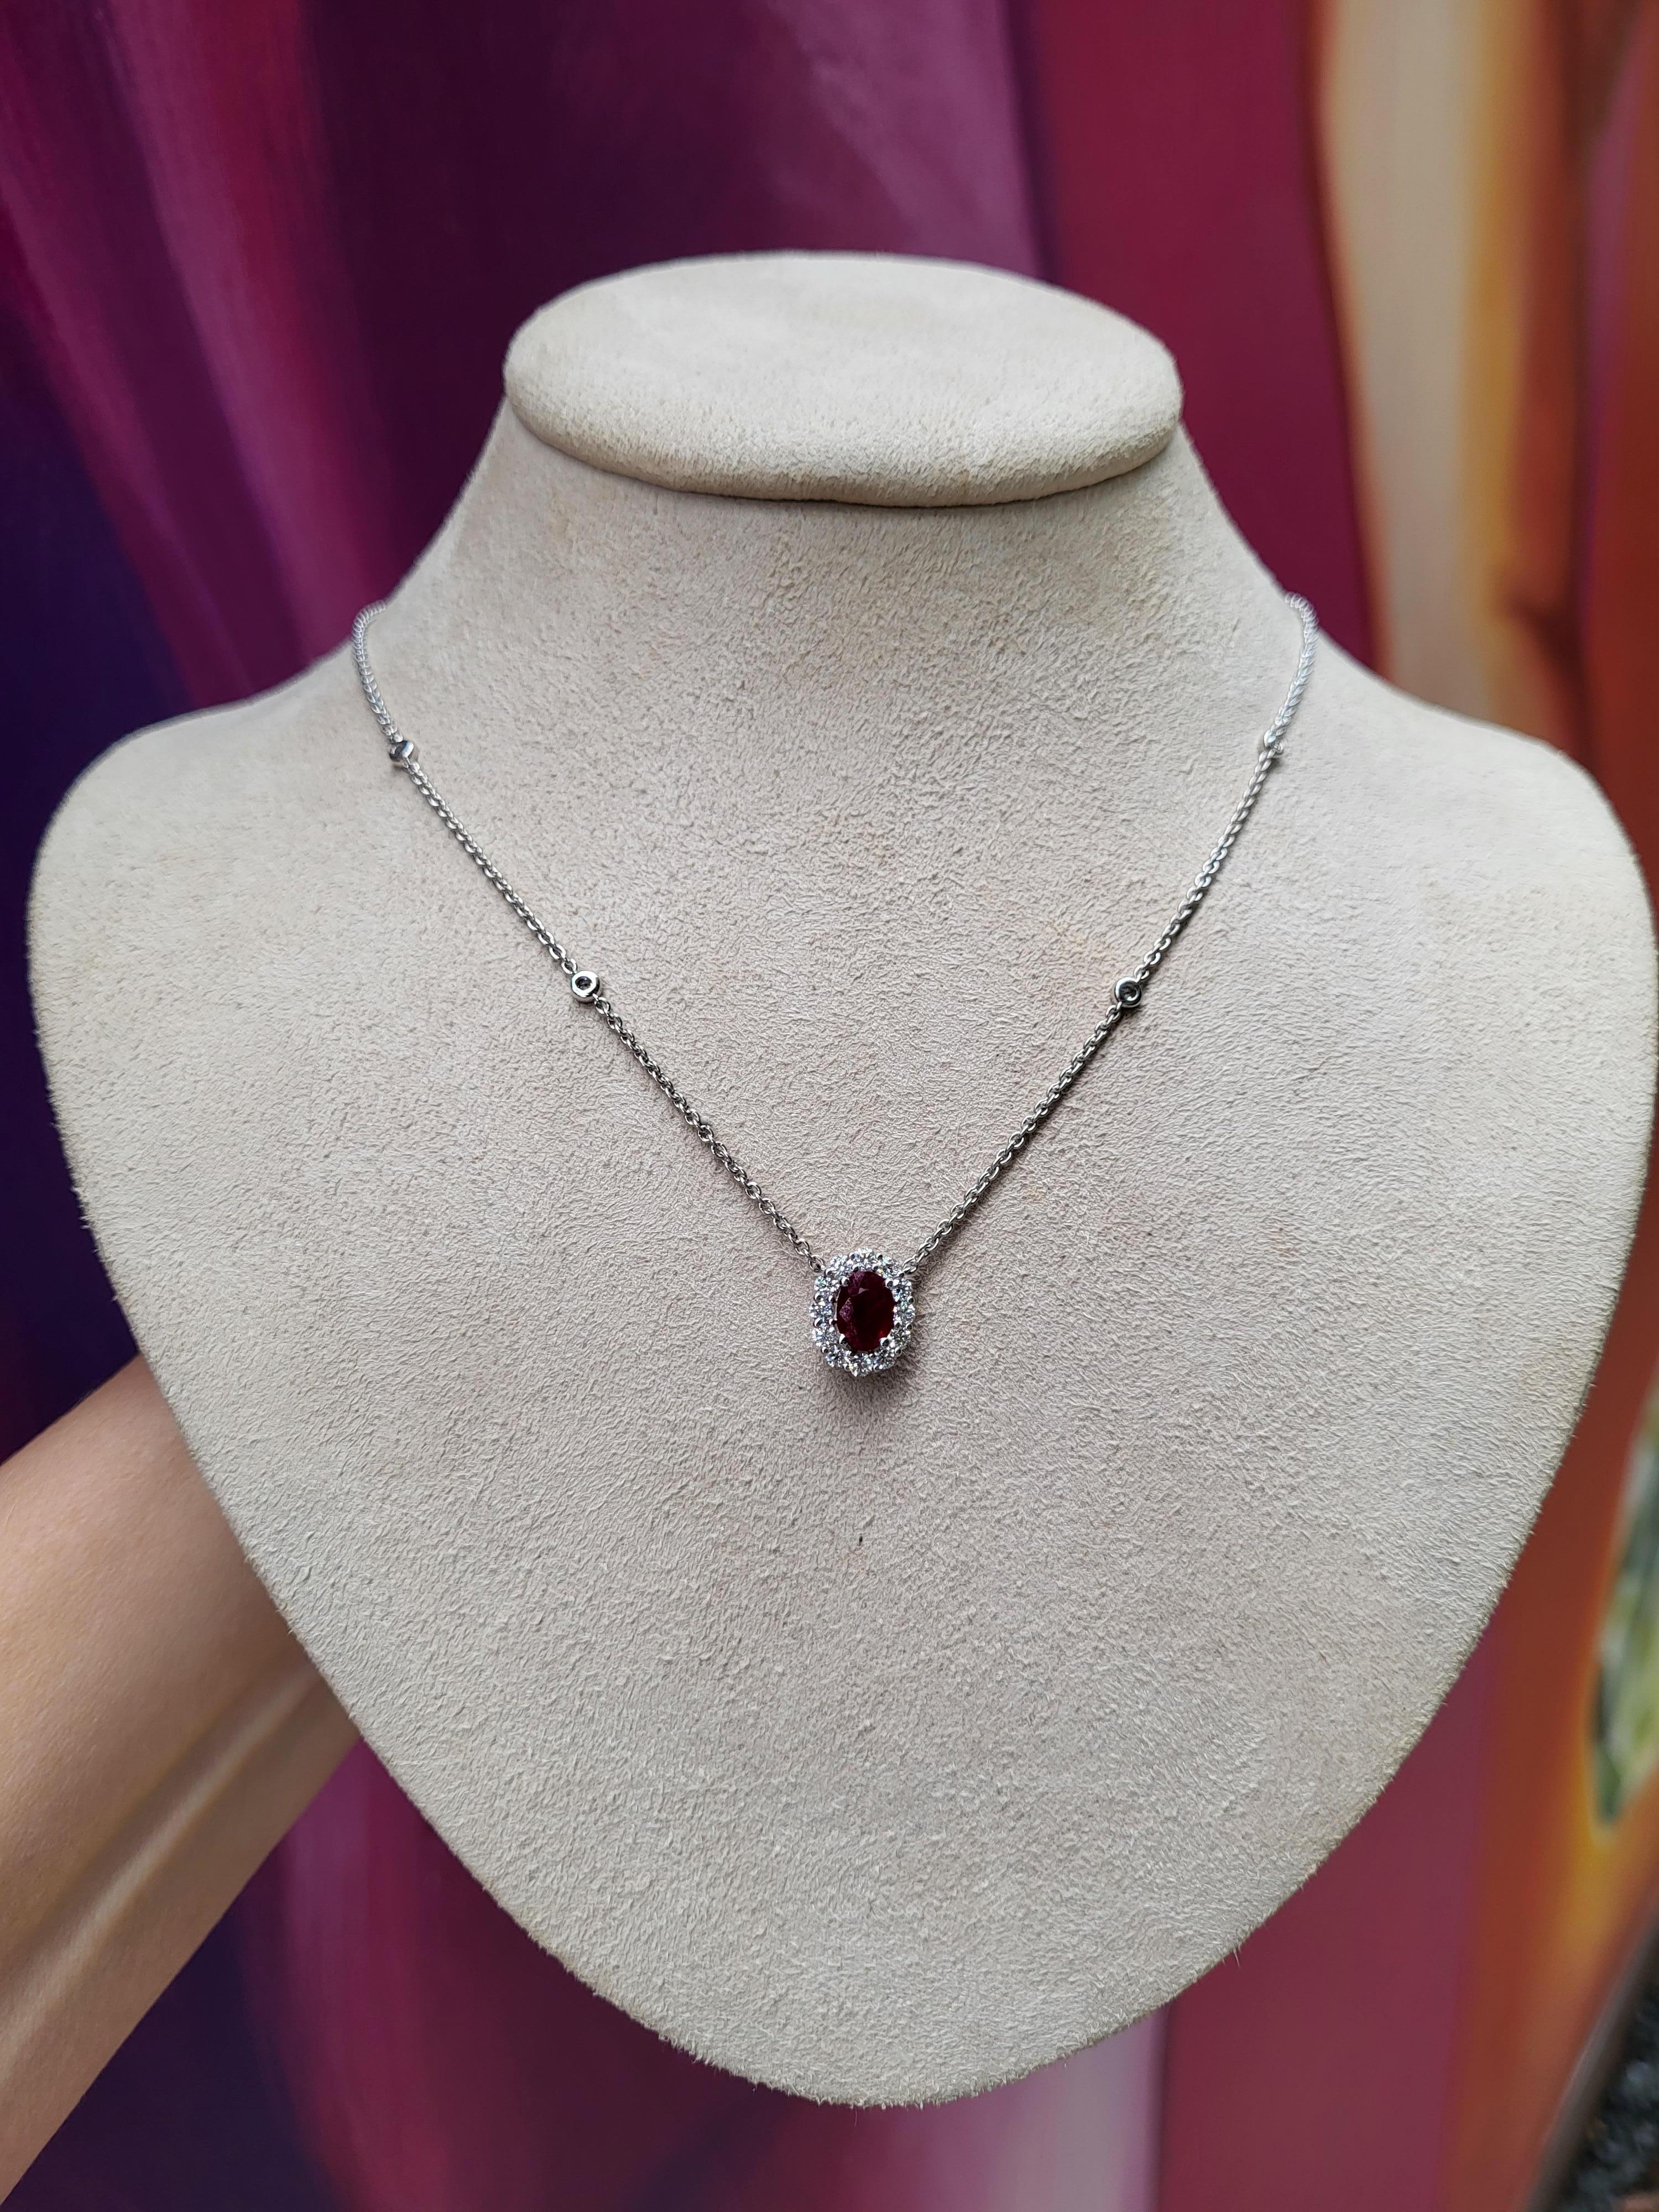 0.71 Carat Oval Cut Natural Ruby & Diamond Pendant Necklace, 18 Karat White Gold For Sale 1